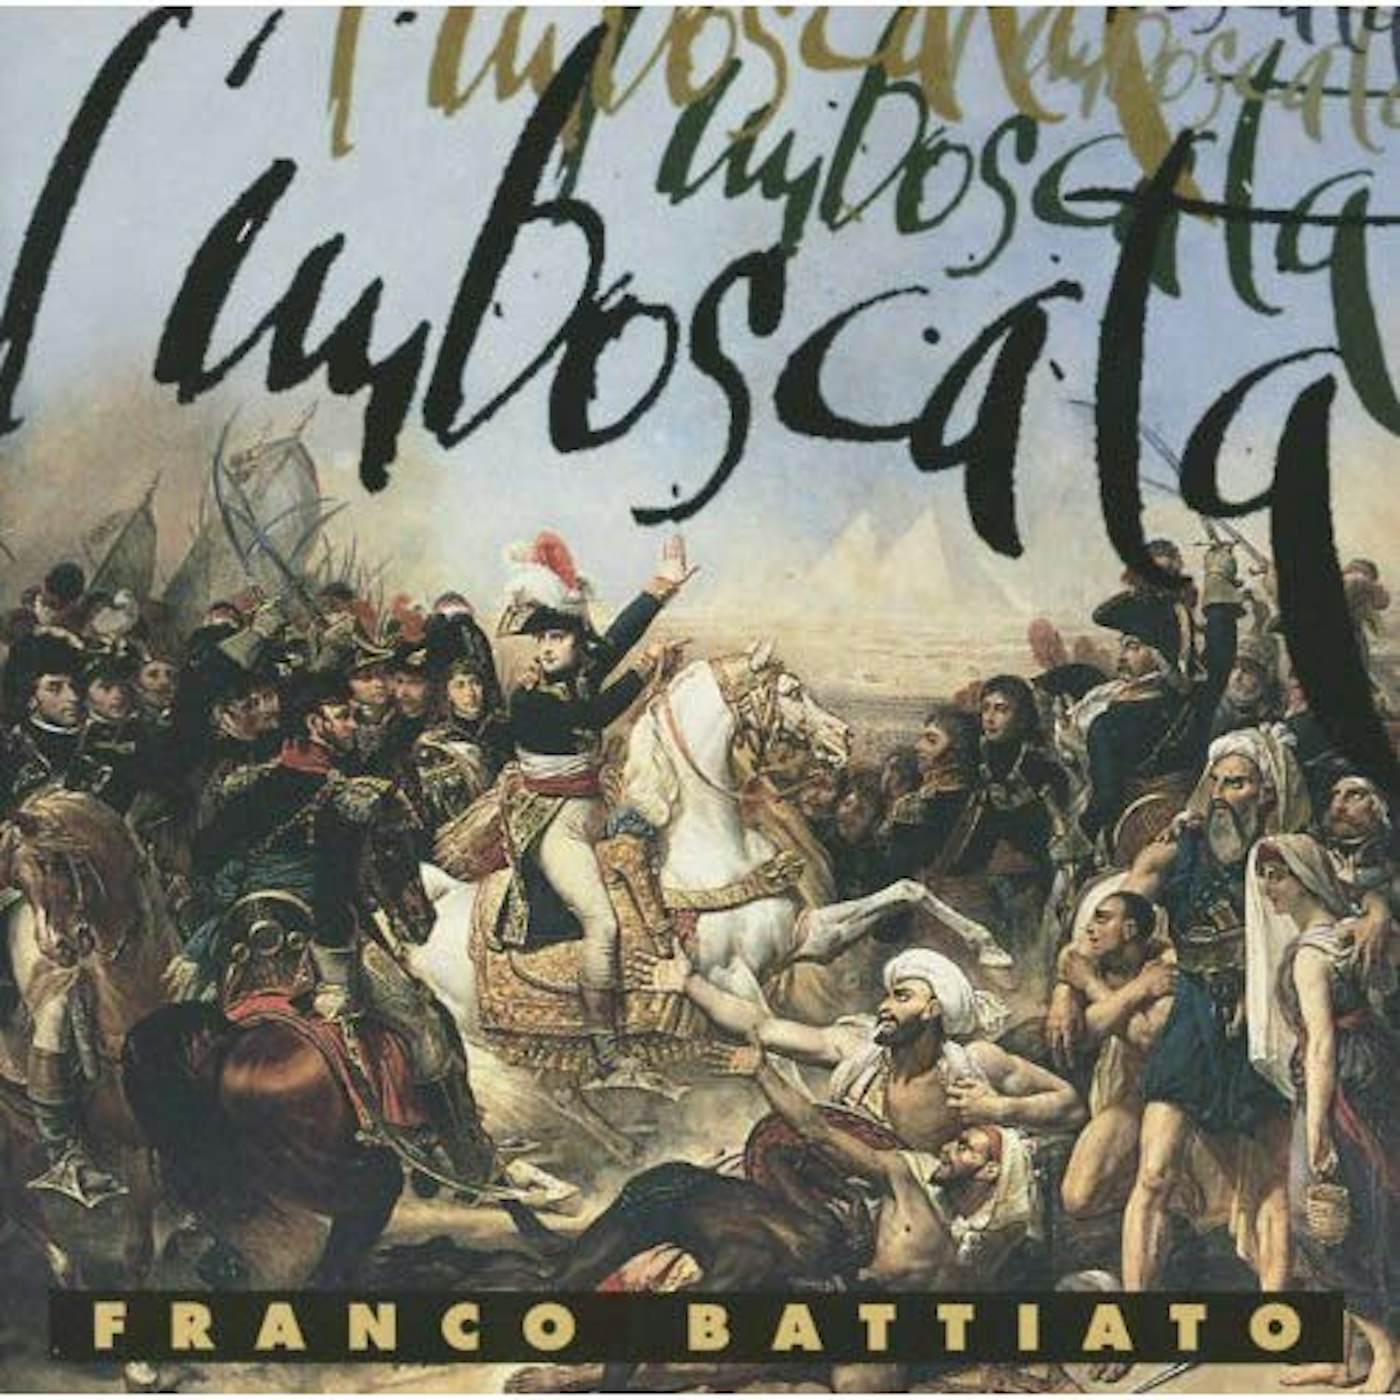 Franco Battiato L'Imboscata Vinyl Record